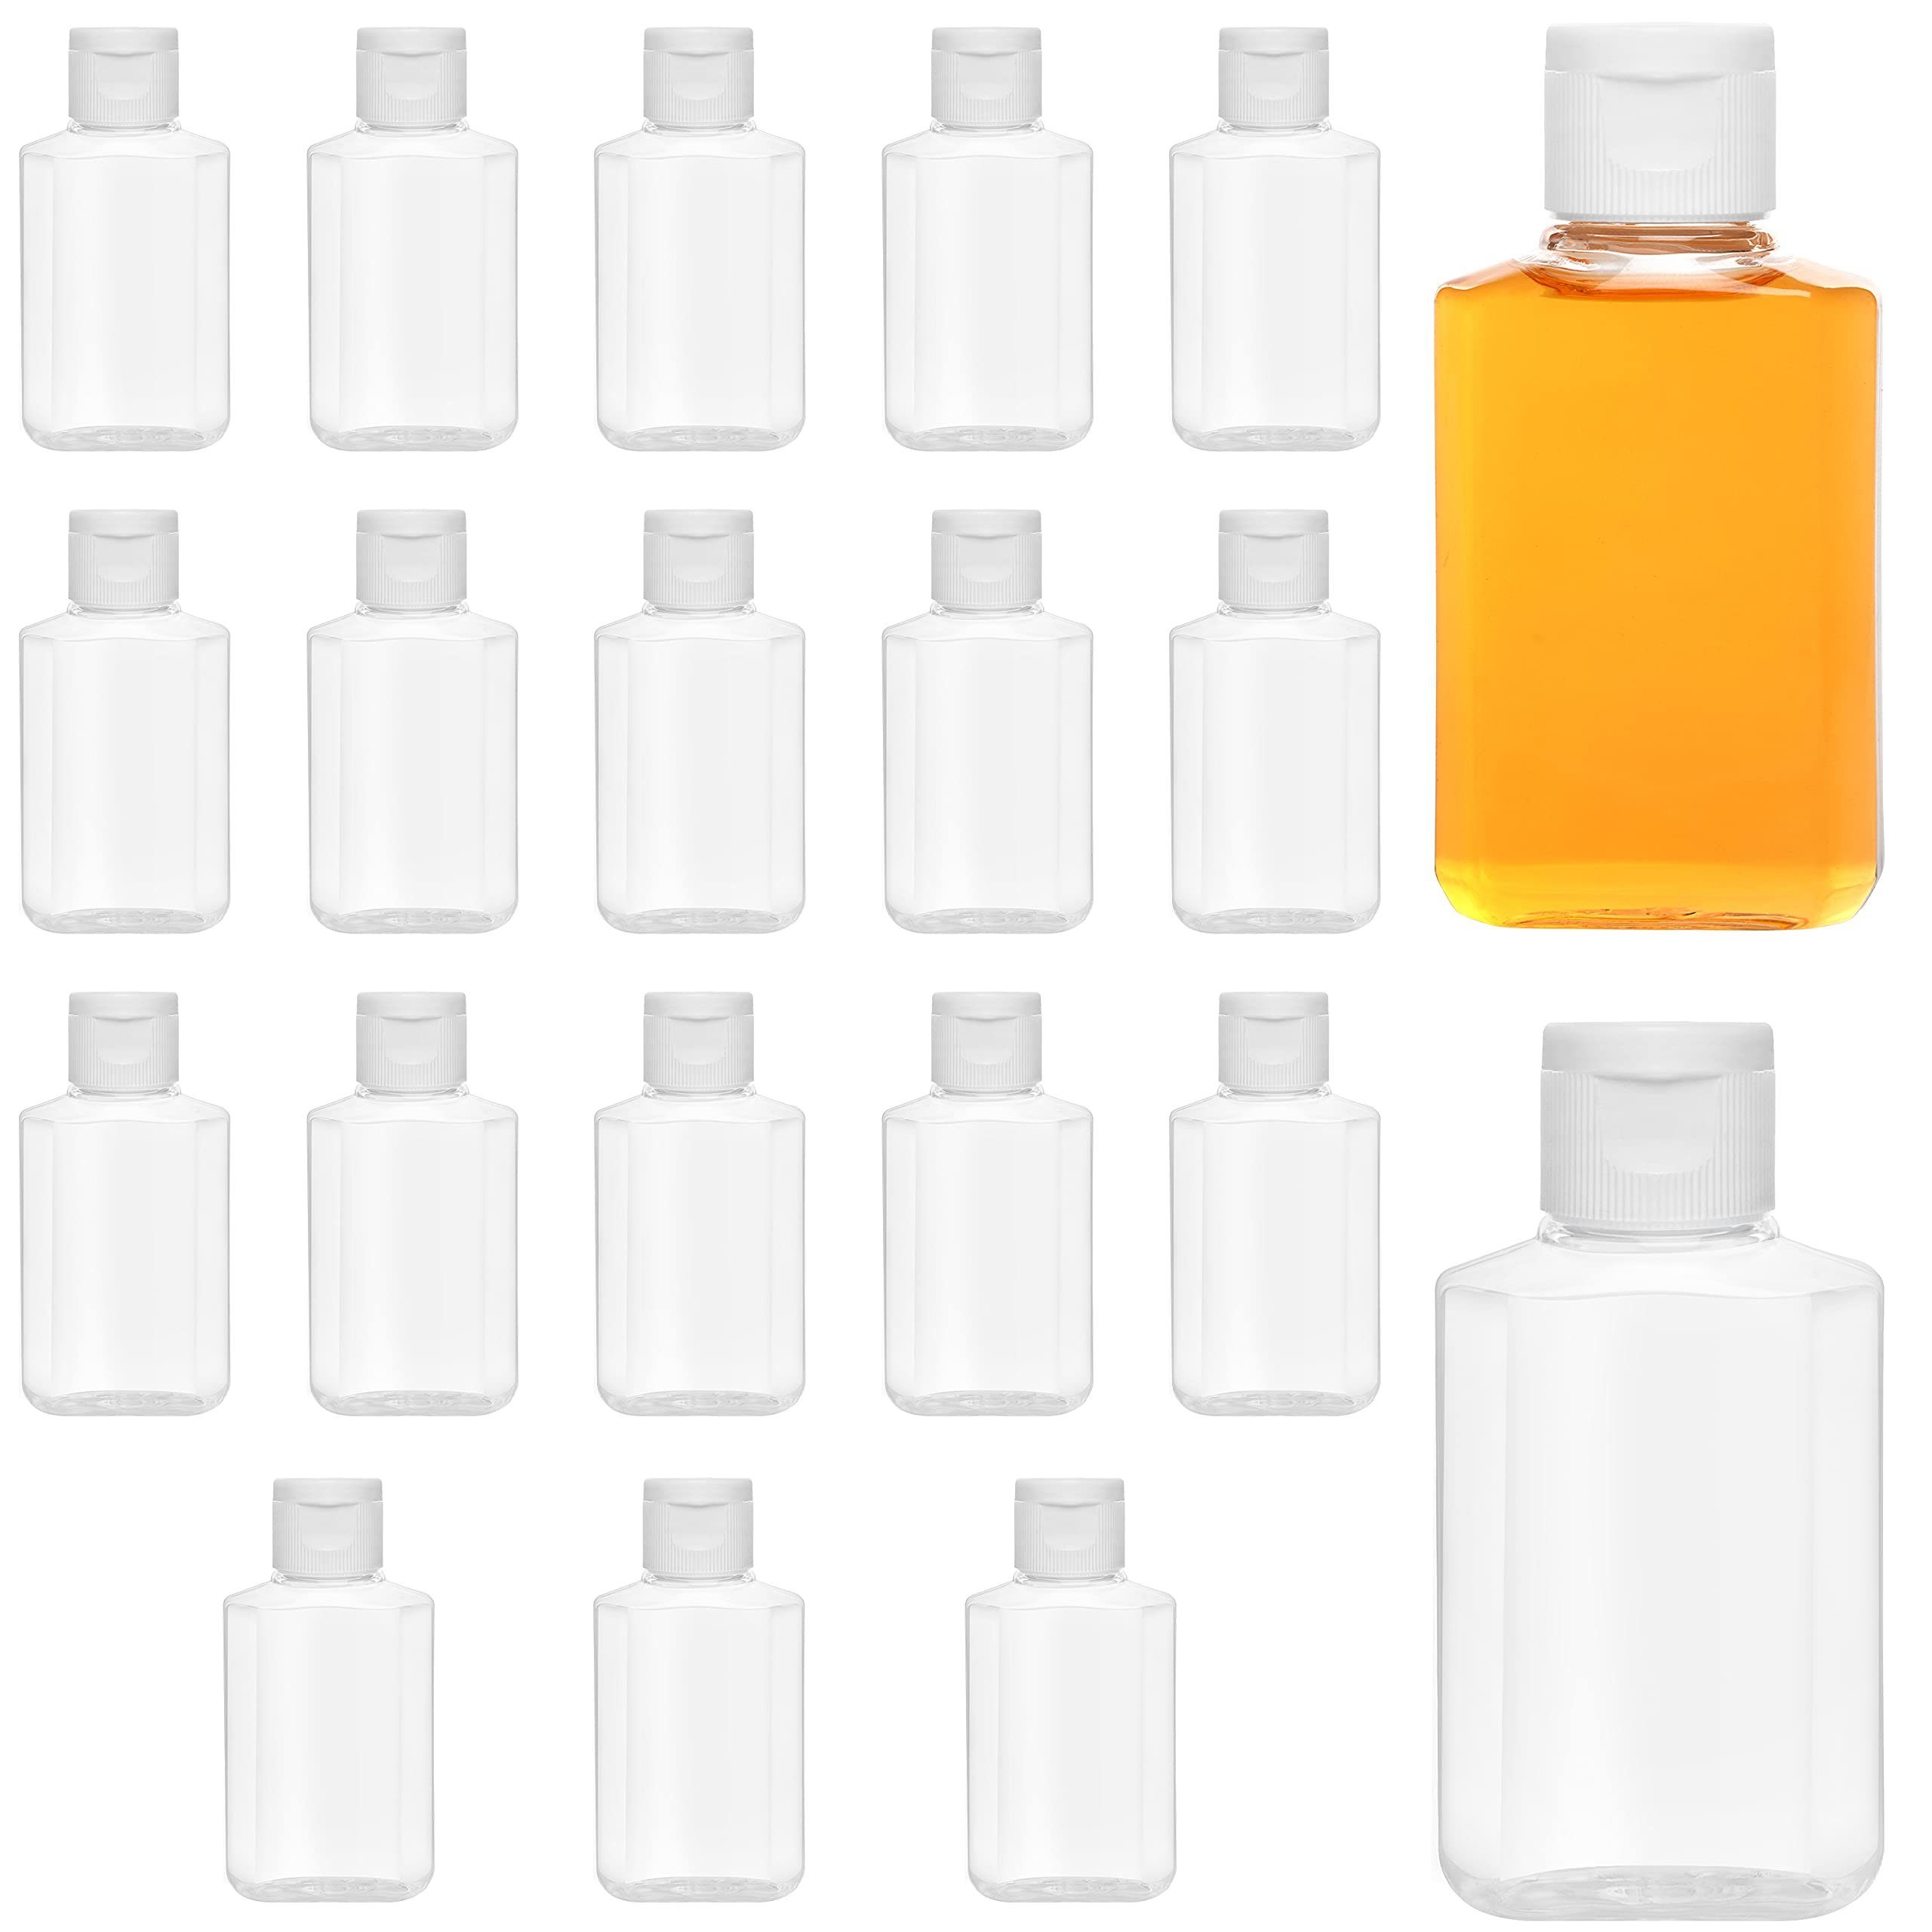 Belle Vous Flachmann Reise Kosmetikflaschen (20 Stück) - 60ml, Travel Cosmetics Bottles (20 pcs) - 60ml